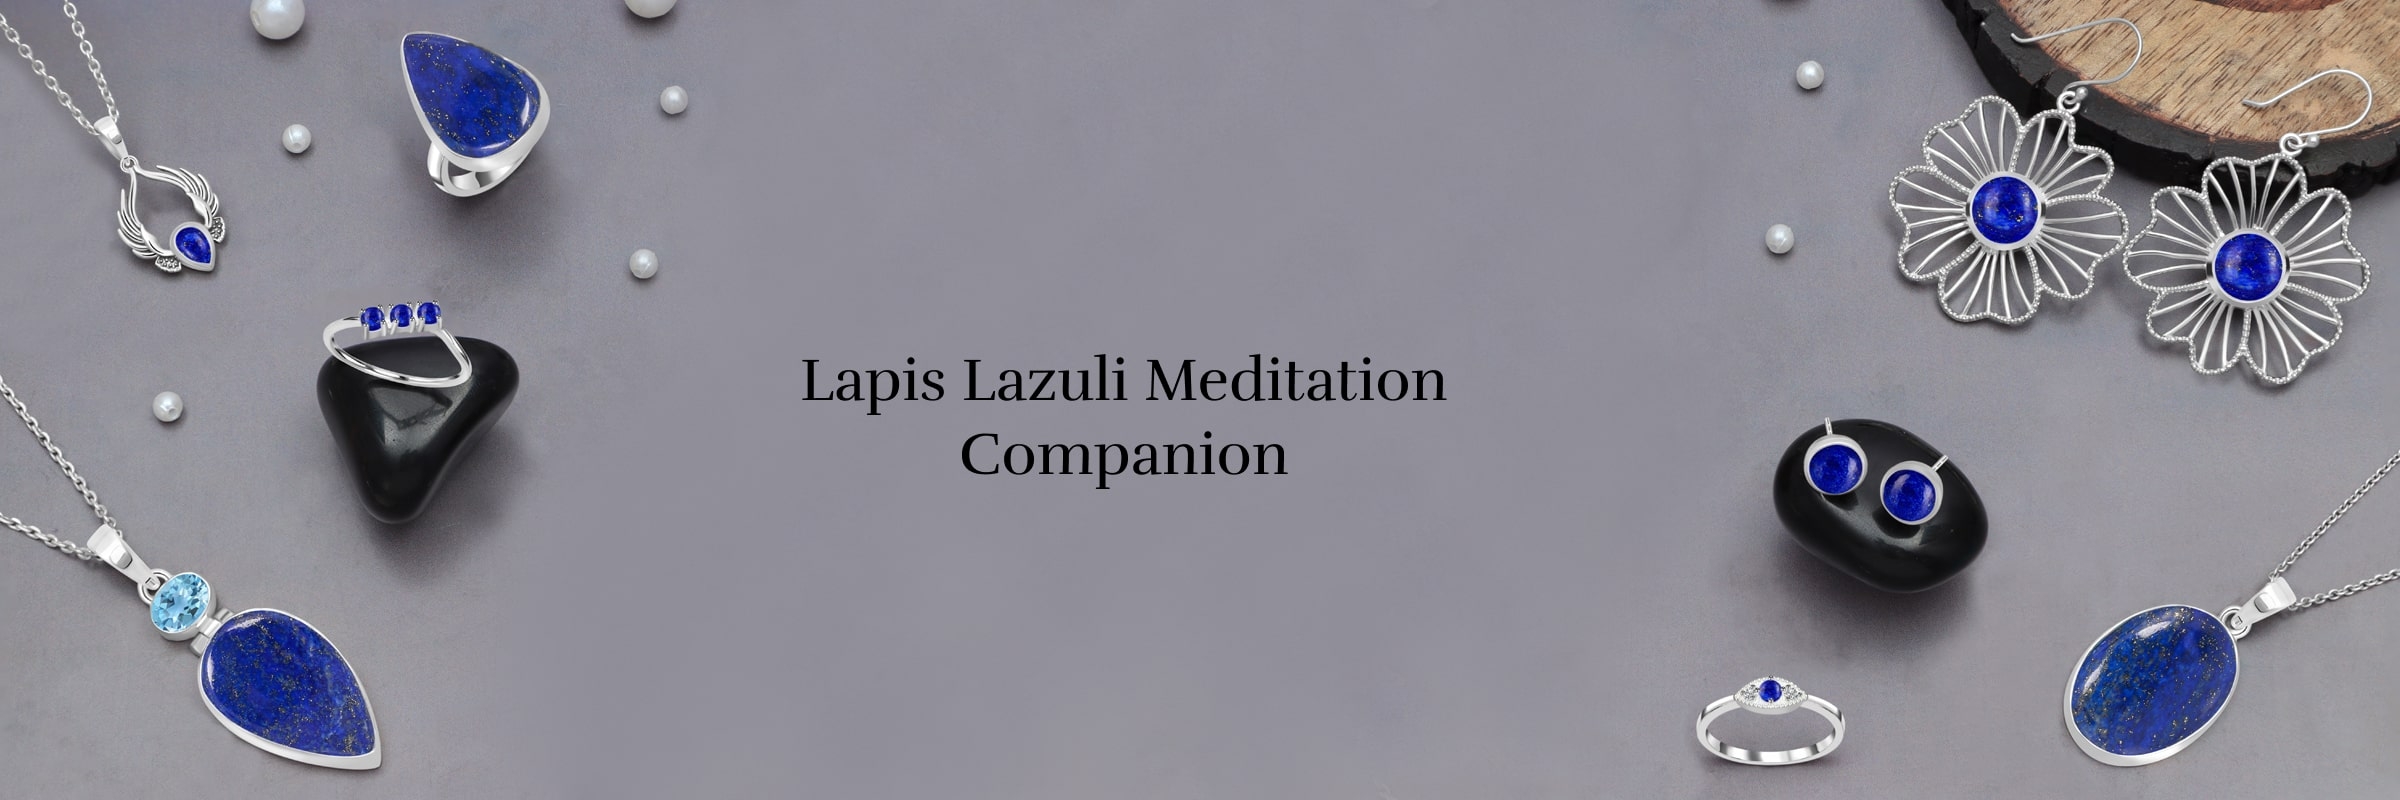 Meditation with Lapis Lazuli